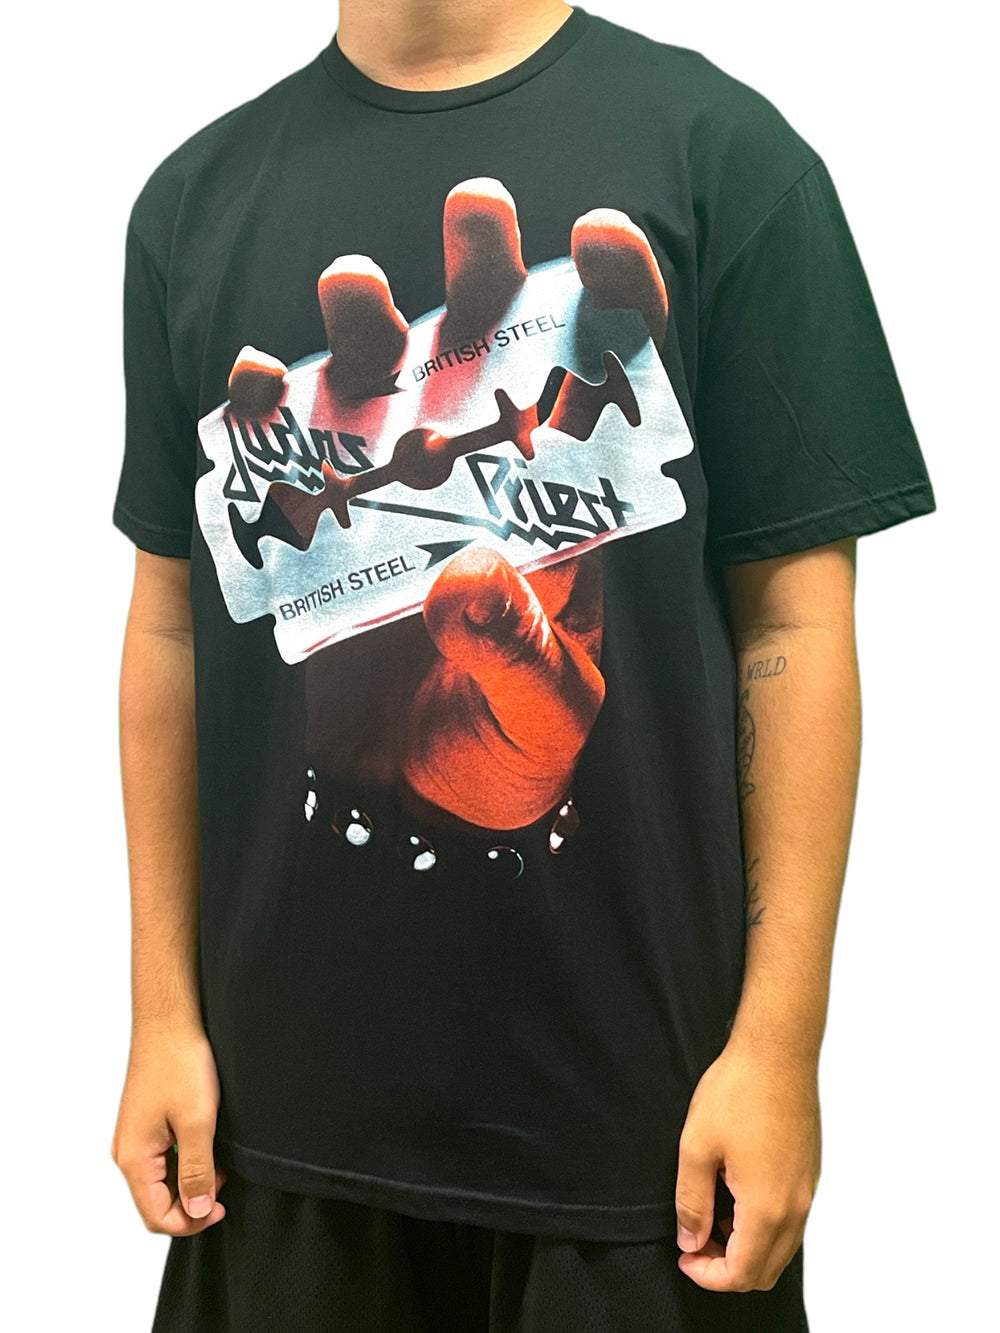 Judas Priest British Steel Unisex Official T Shirt Brand New Various Sizes